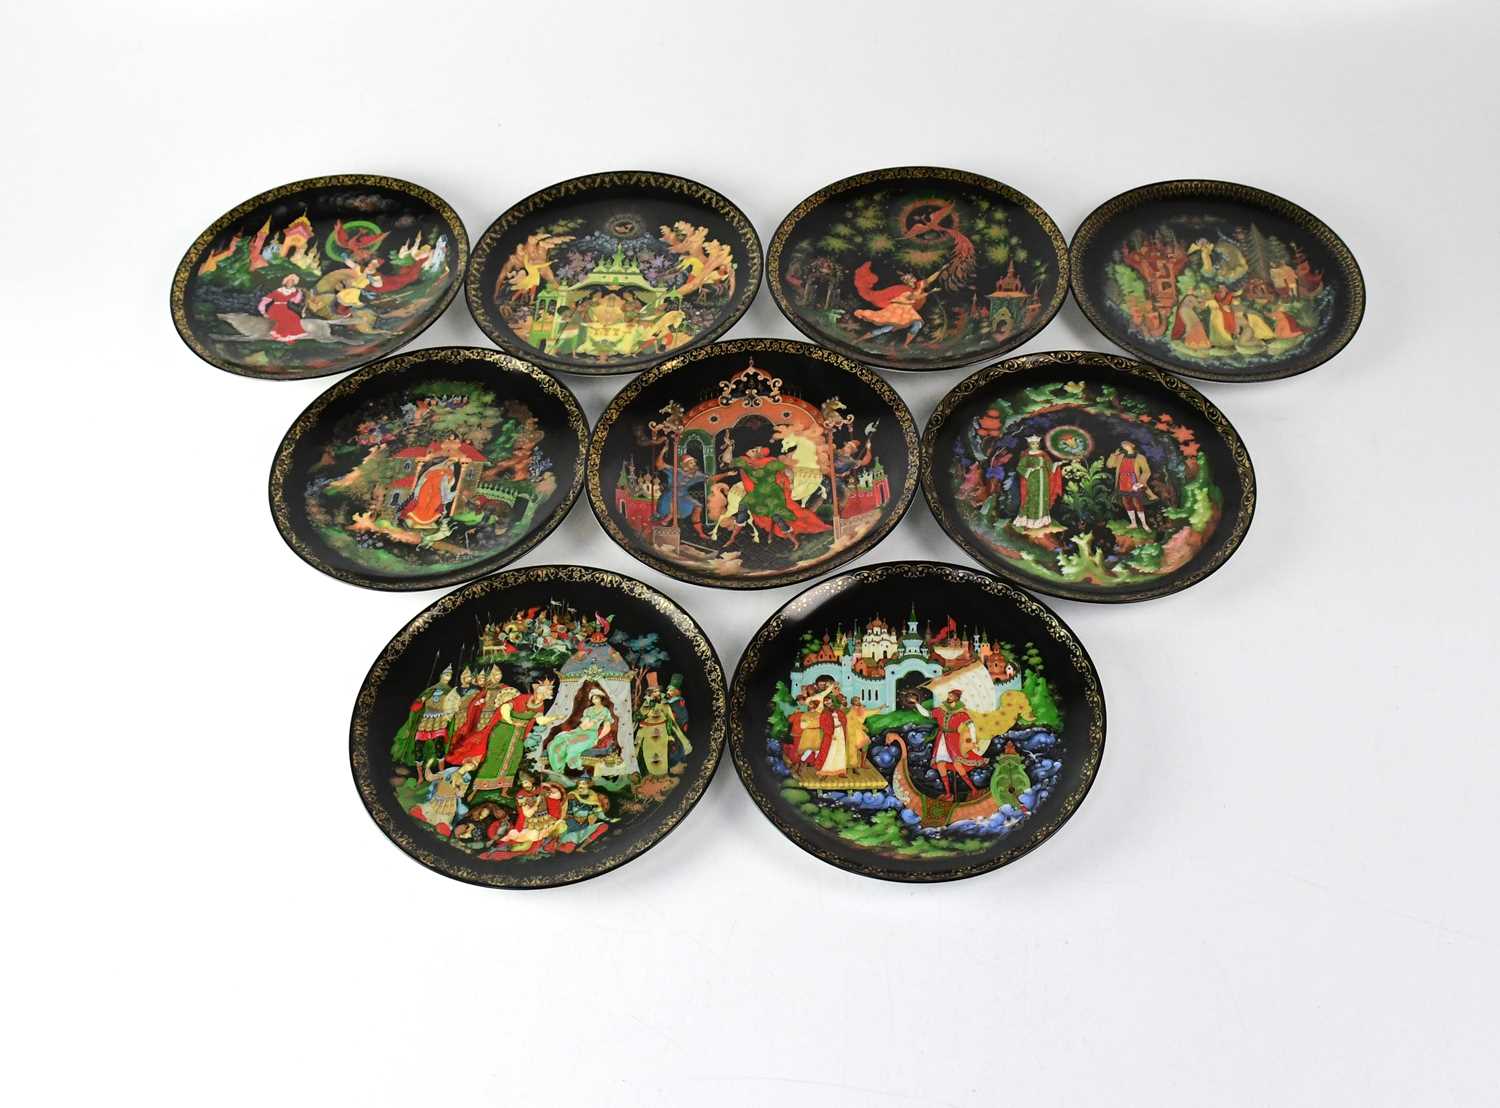 BRADFORD EXCHANGE; nineteen Russian collectors' plates dated 1989.